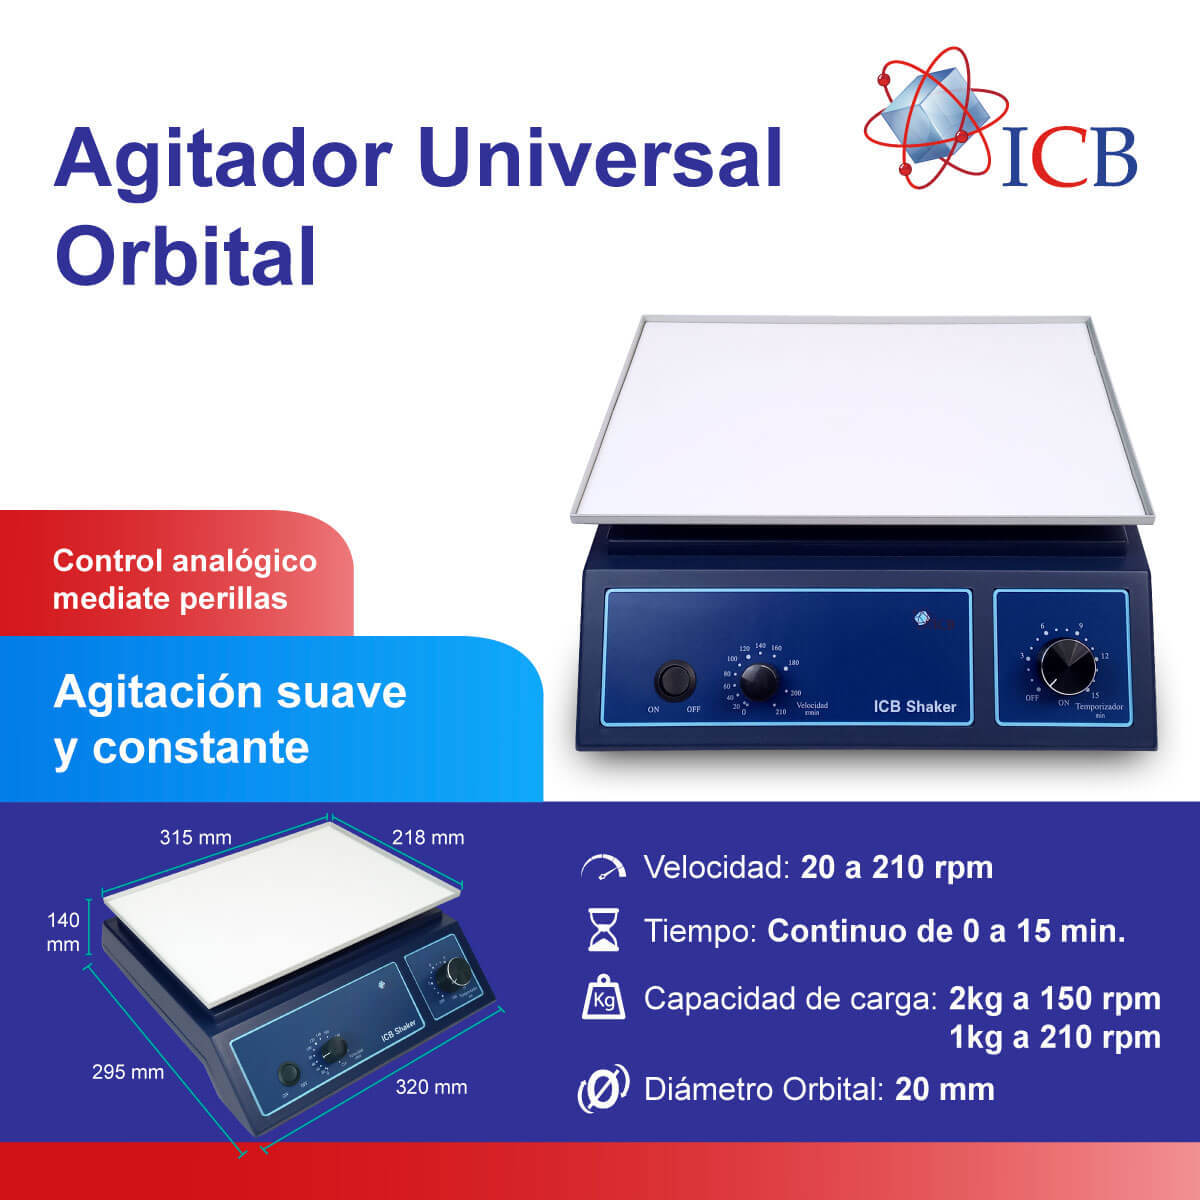 Agitador Universal Orbital Marca ICB